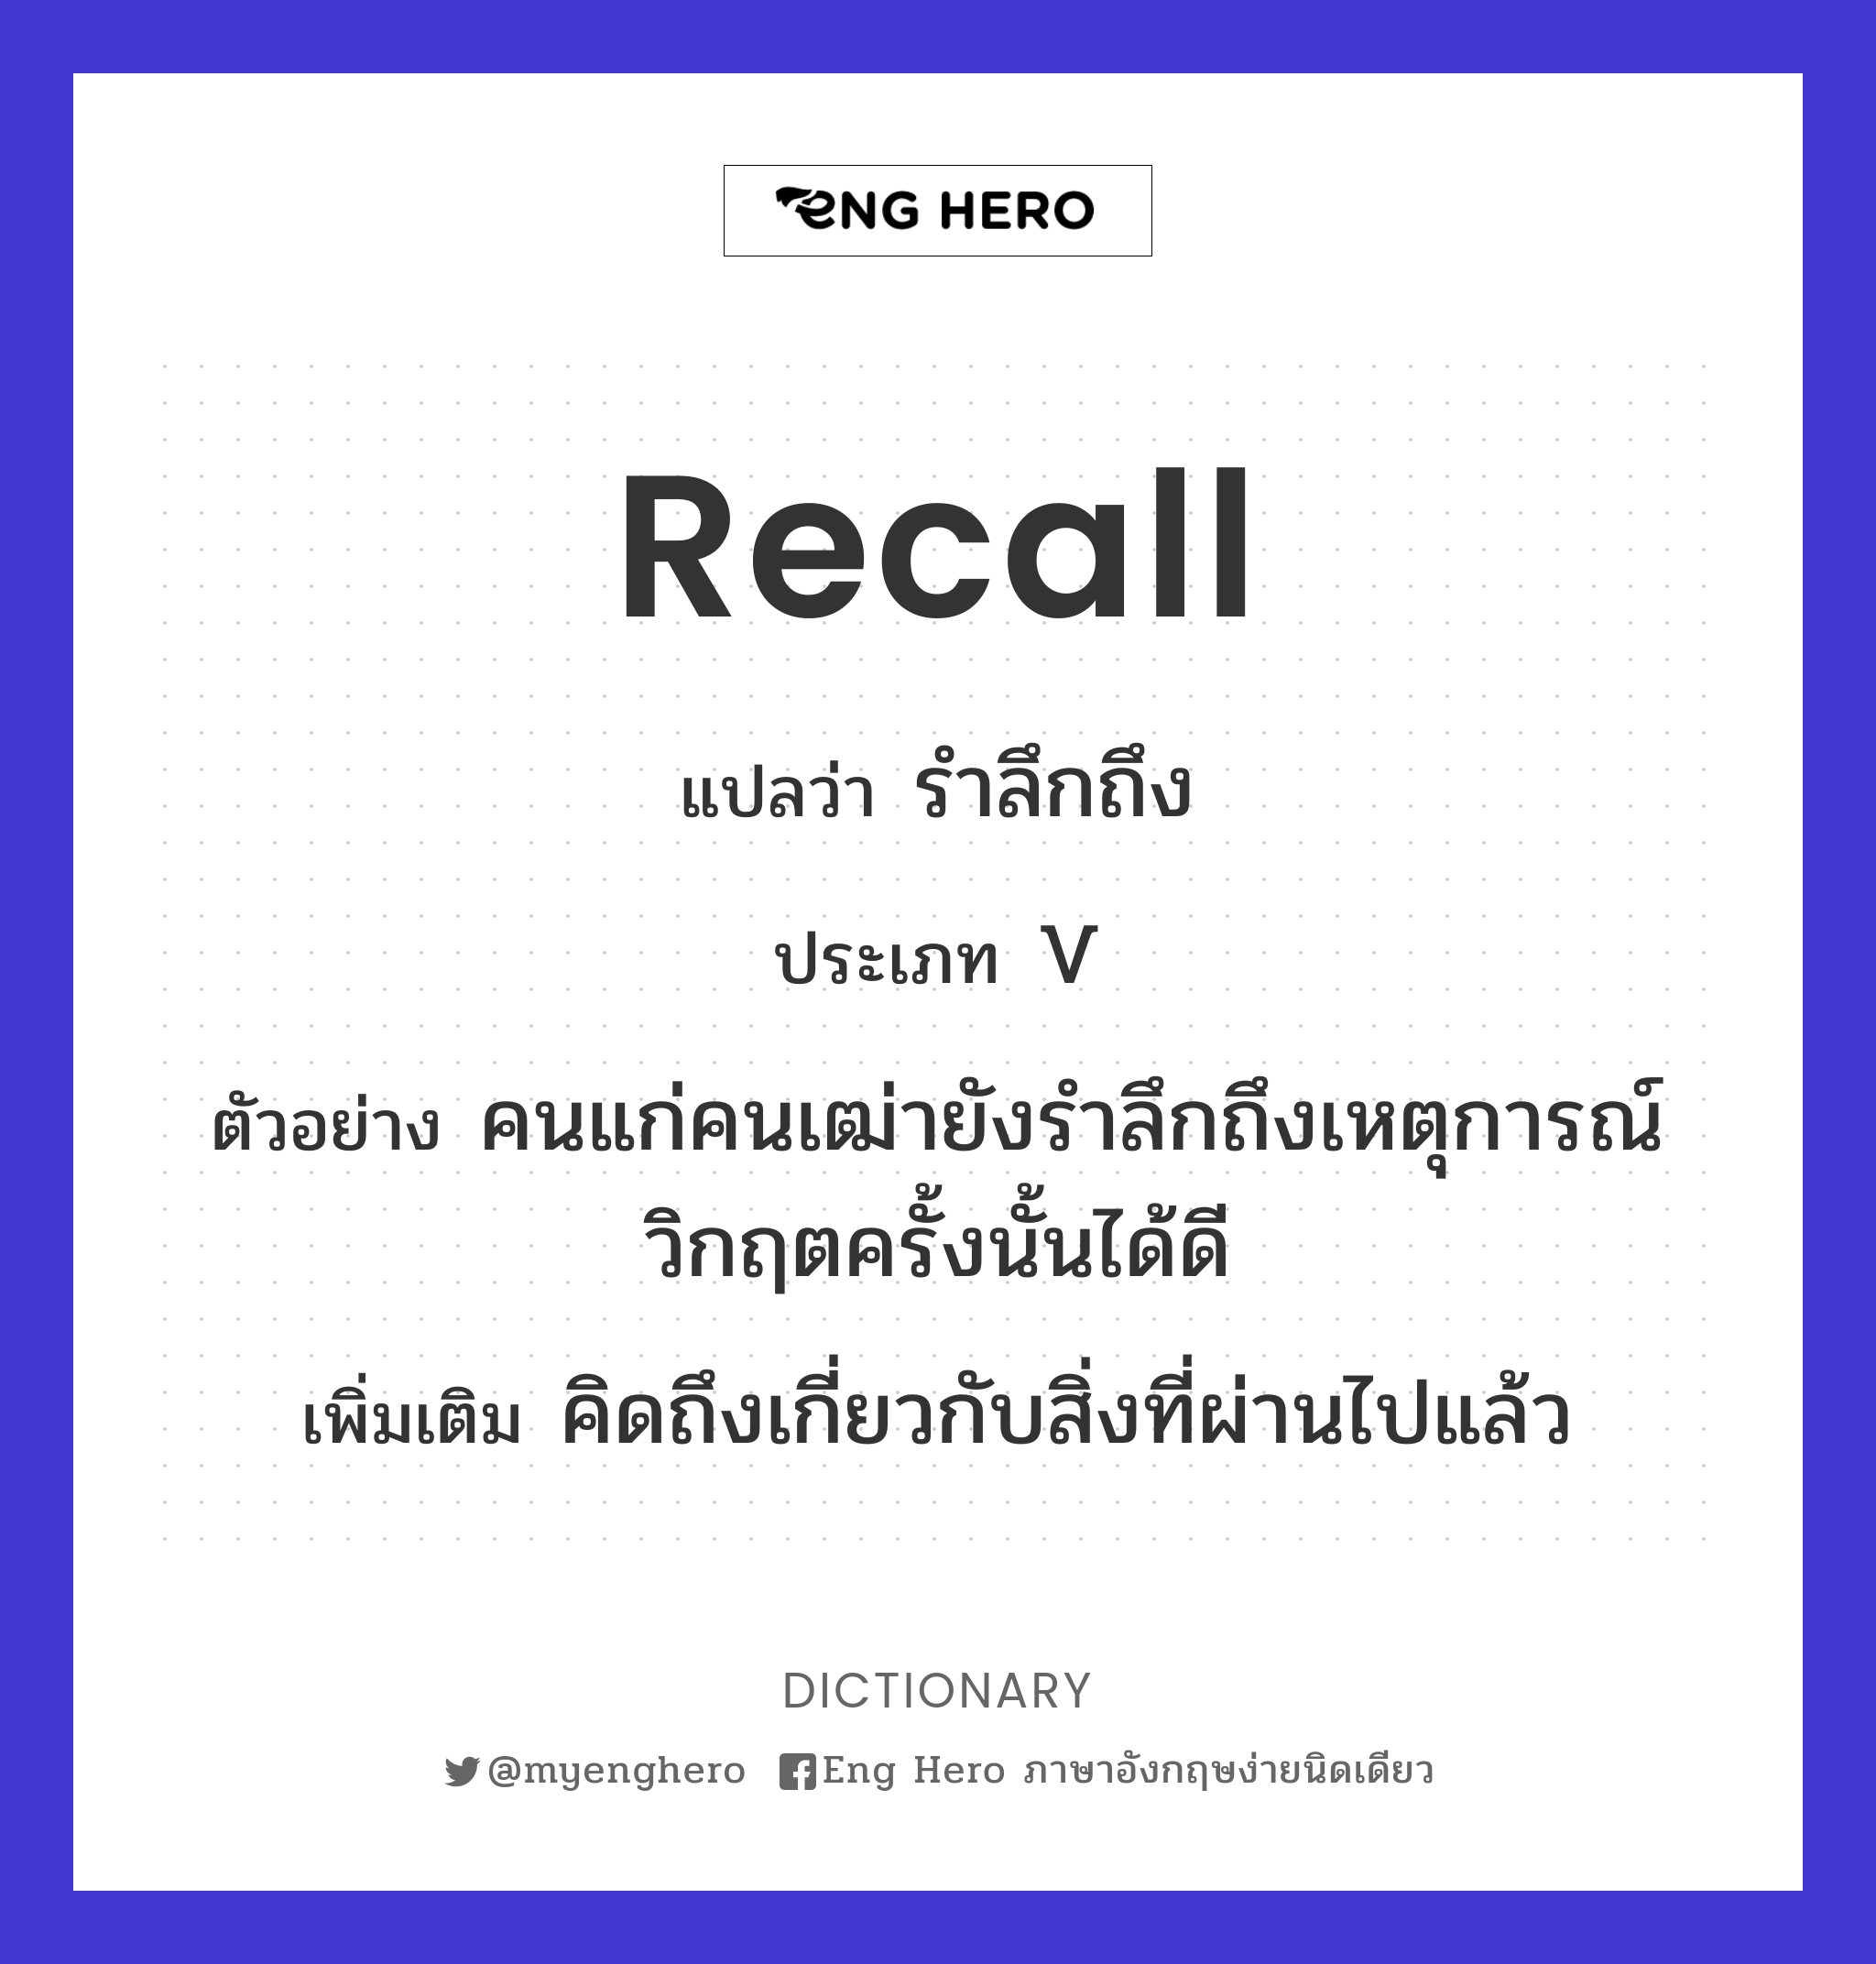 recall